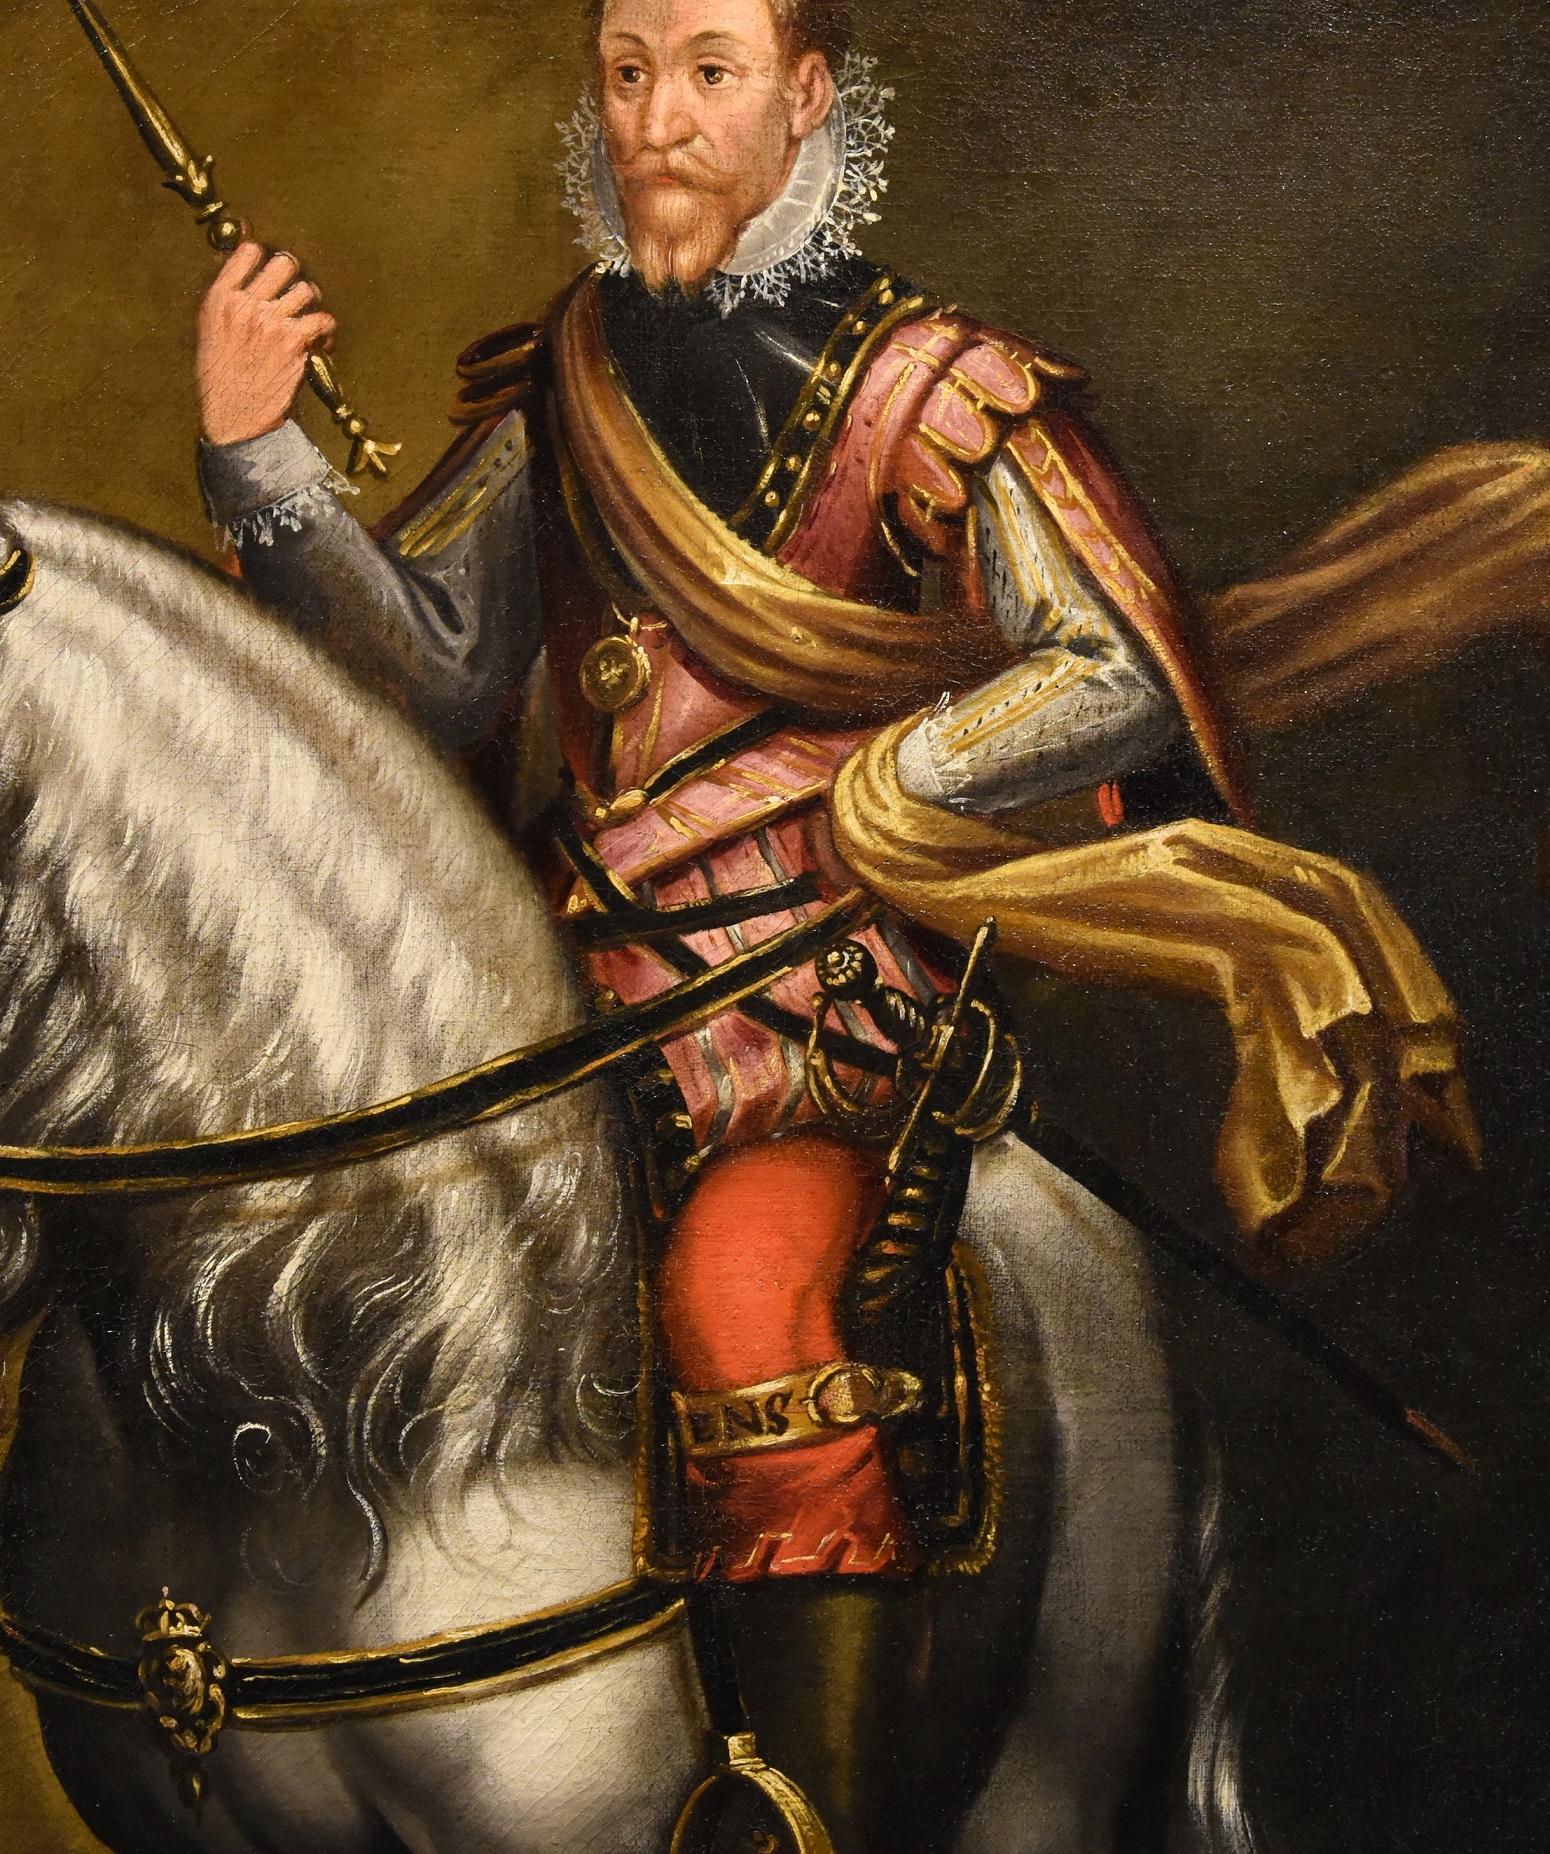 Jan Kraeck, in Italy Giovanni Caracca (Haarlem c. 1540 - Turin 1607) Workshop of

Equestrian portrait of Charles Emmanuel I, Duke of Savoy (Rivoli 1562 - Savigliano 1630) known as 'the Great'
Oil on canvas (148 × 122 cm - Framed 165 × 139 cm)

The